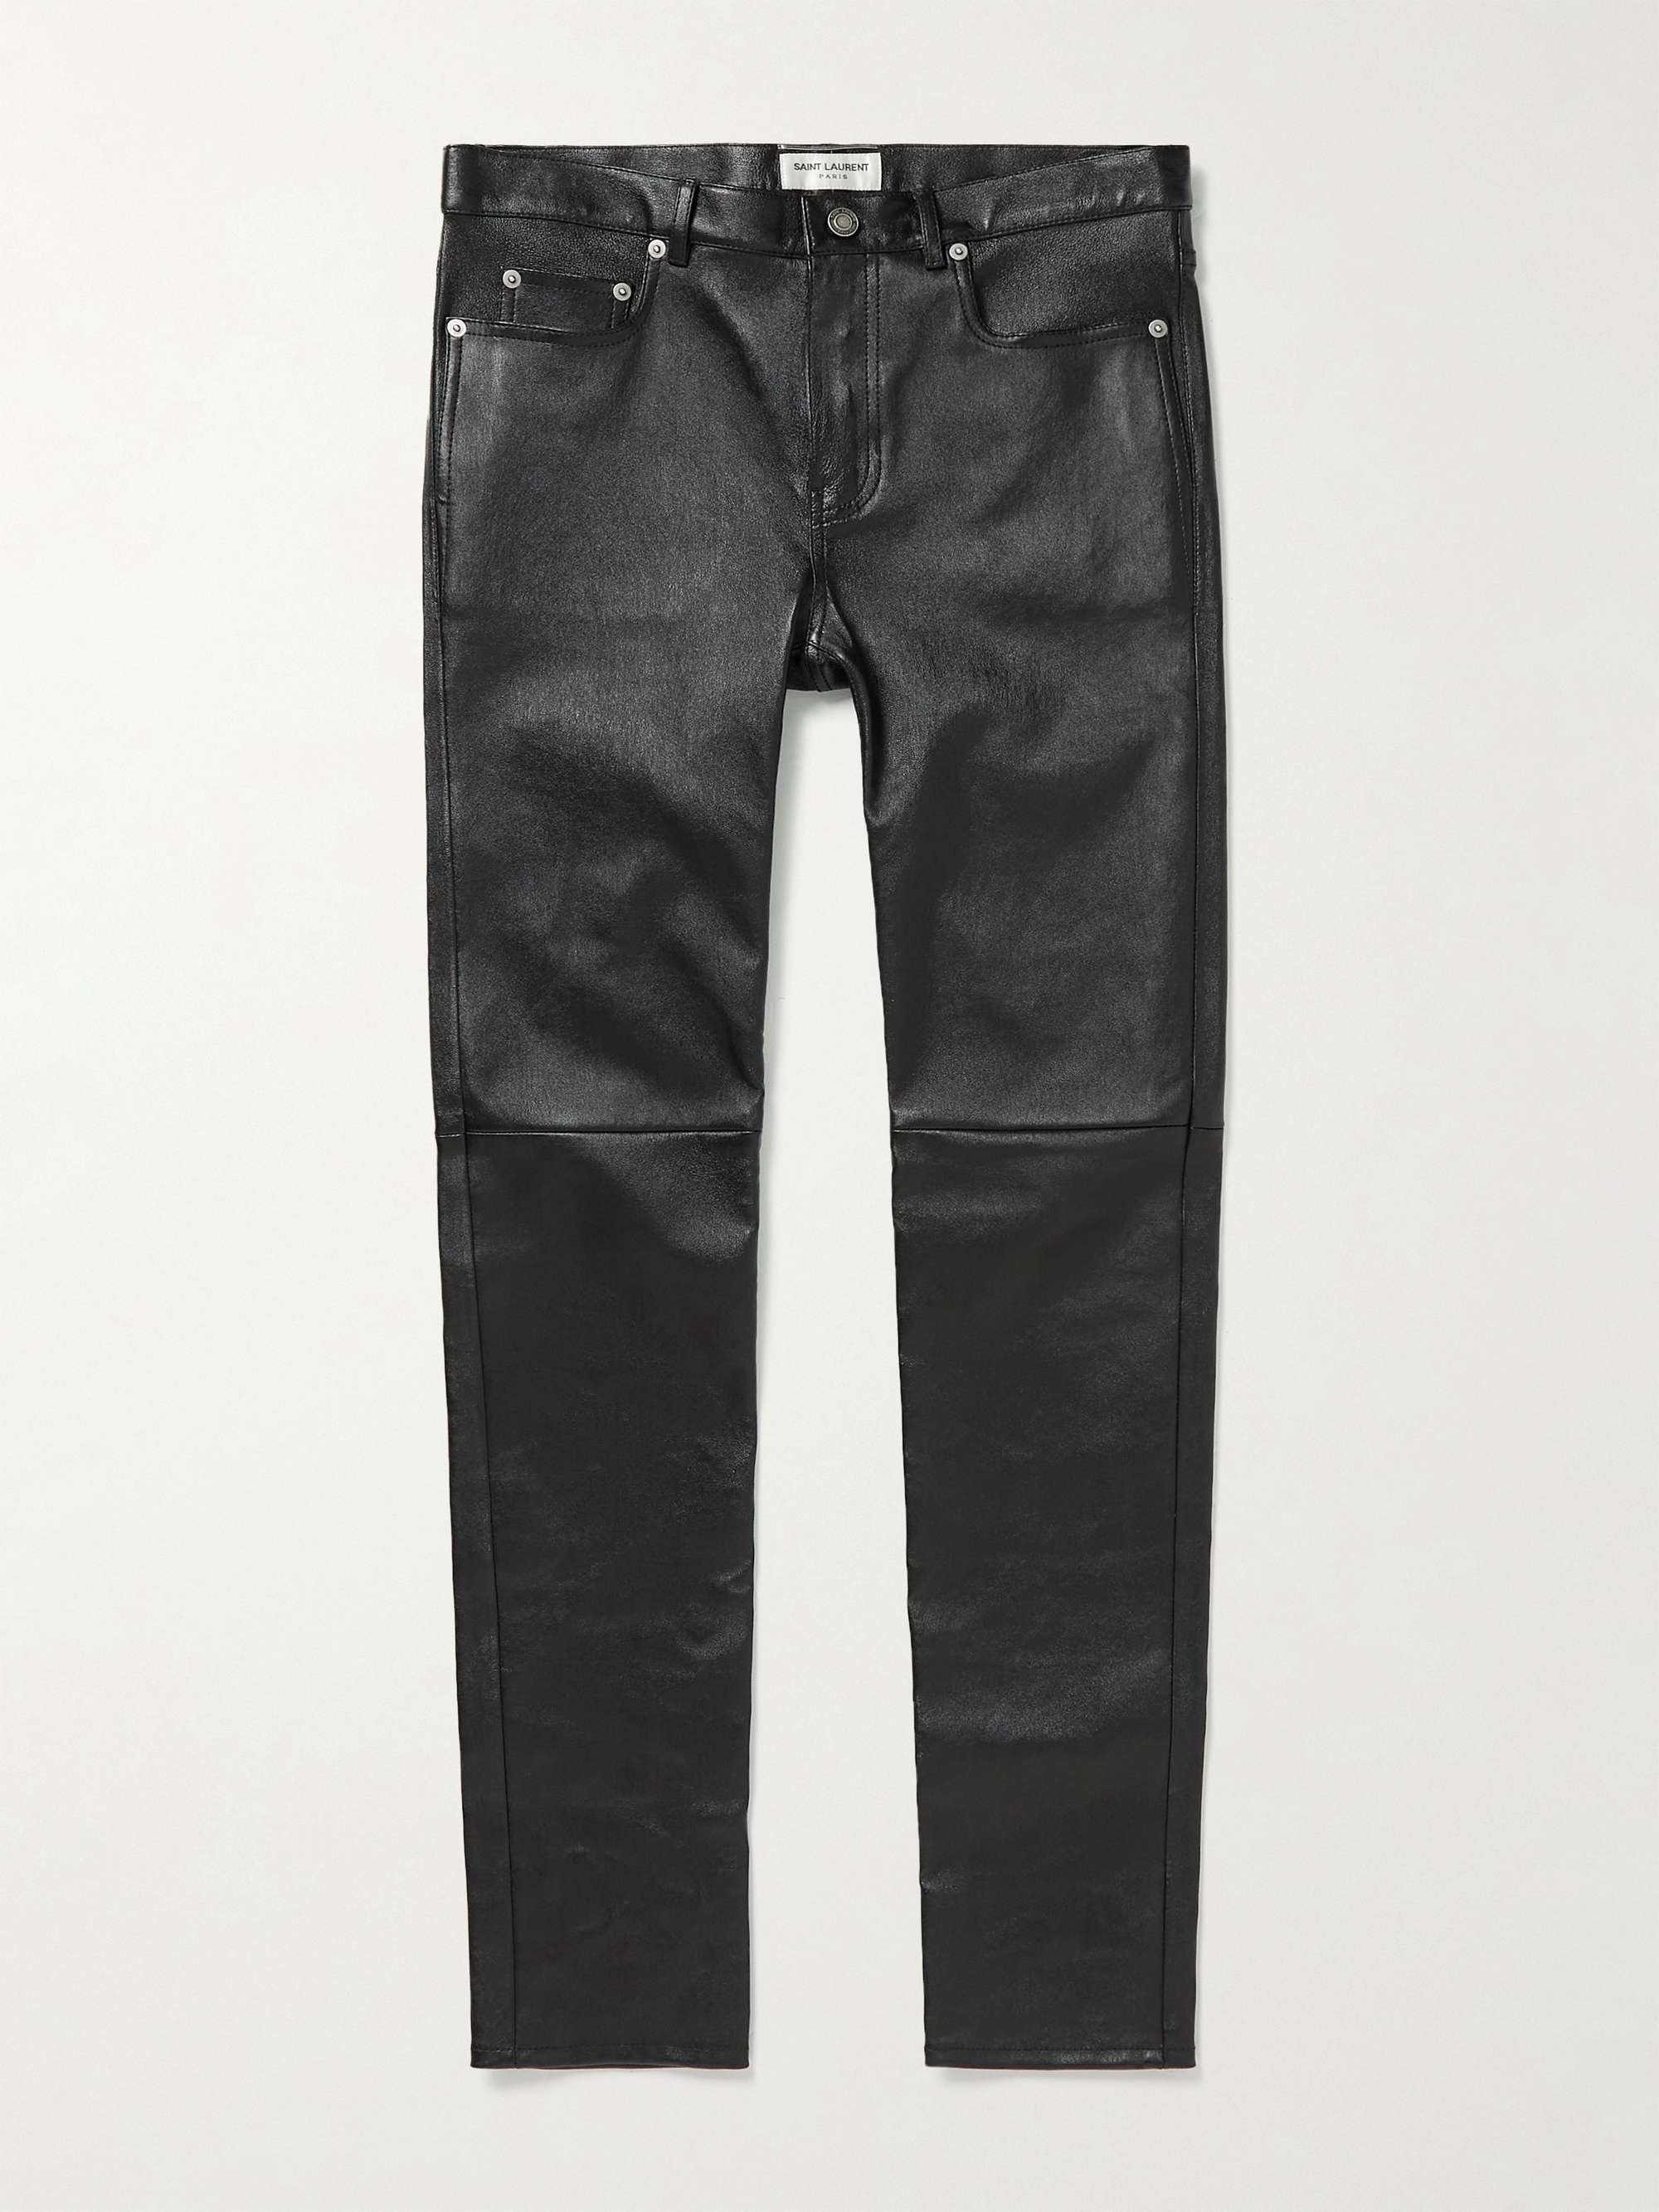 SAINT LAURENT Skinny-Fit Leather Trousers for Men | MR PORTER